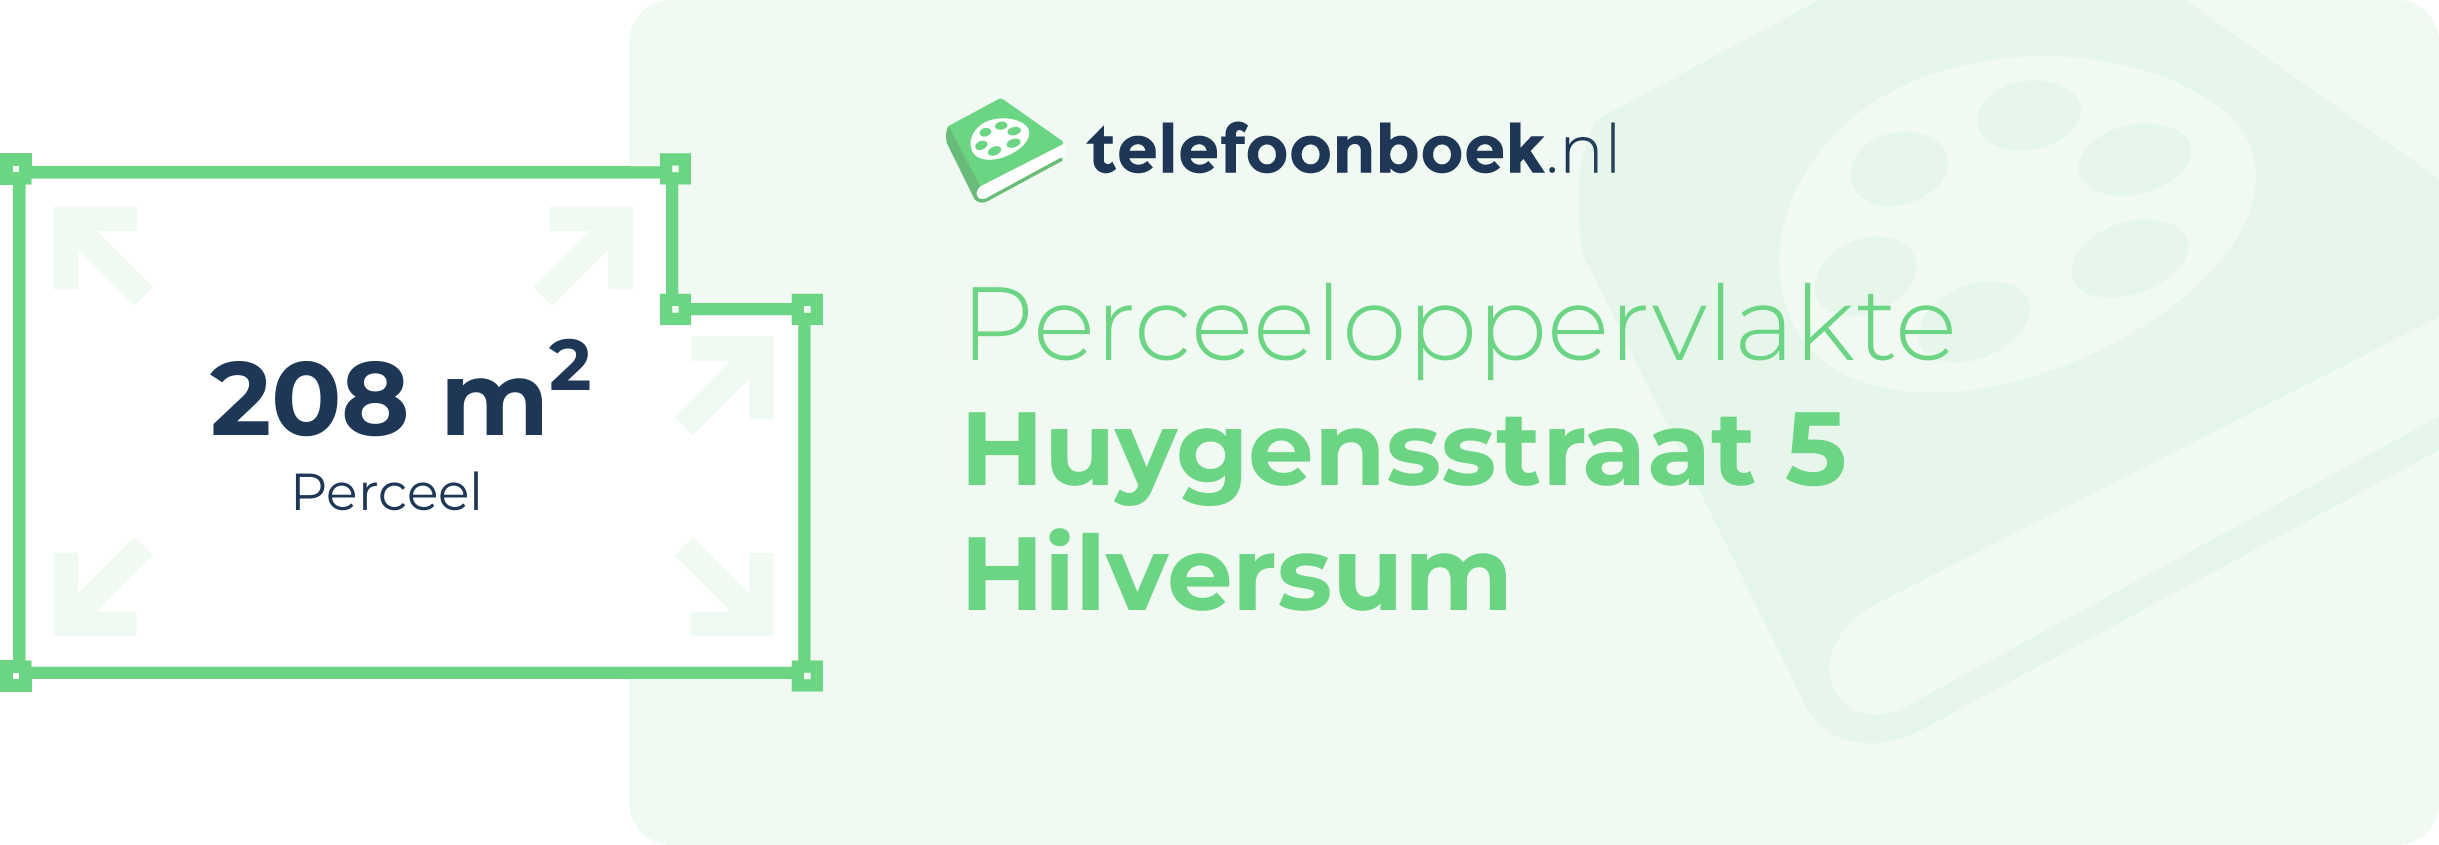 Perceeloppervlakte Huygensstraat 5 Hilversum